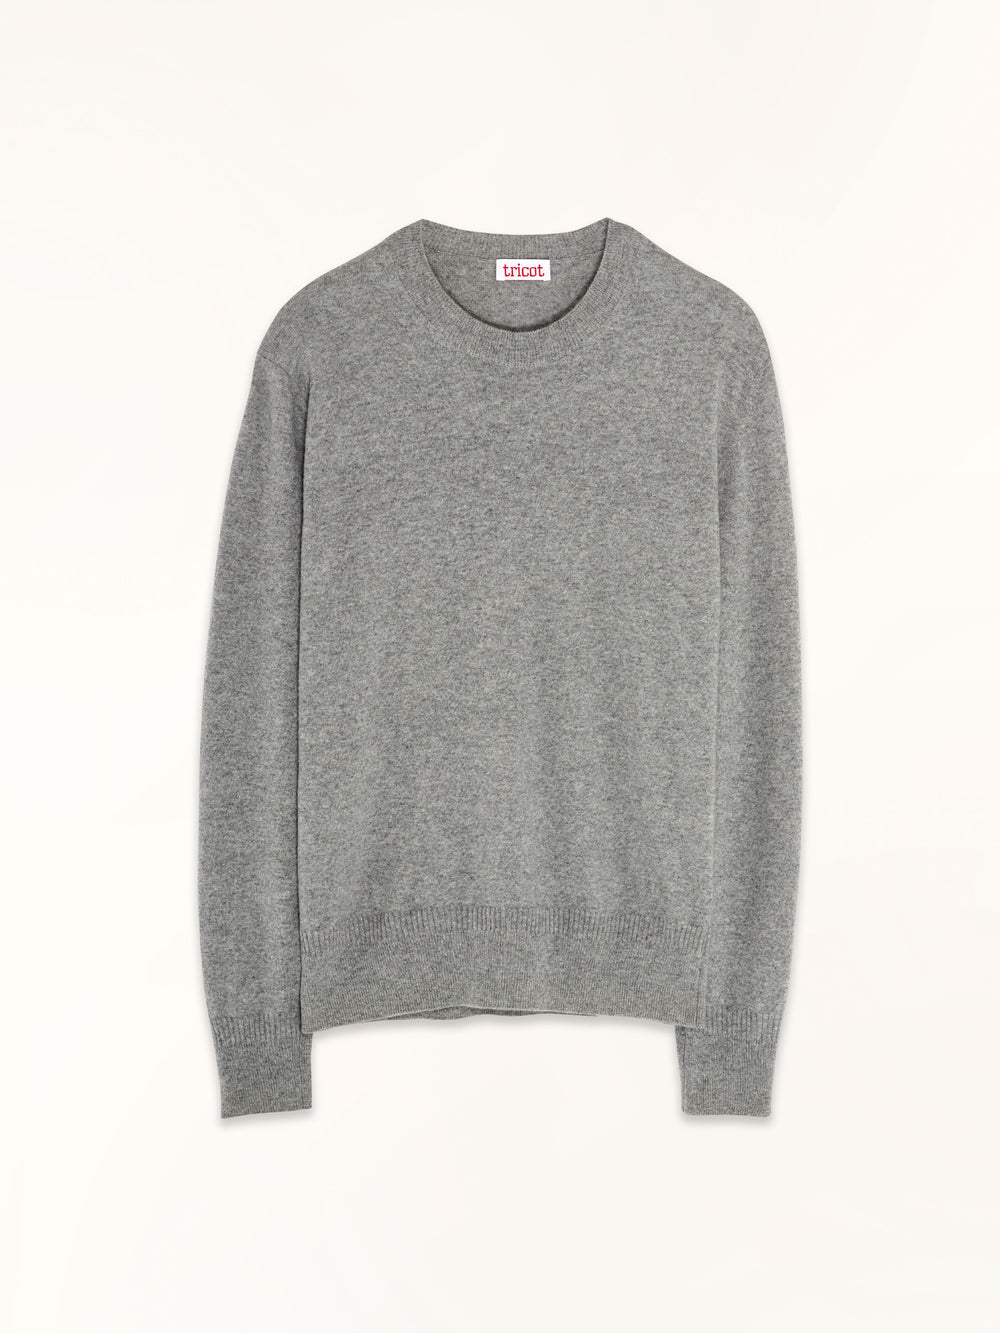 Light gray crewneck cashmere sweater for men